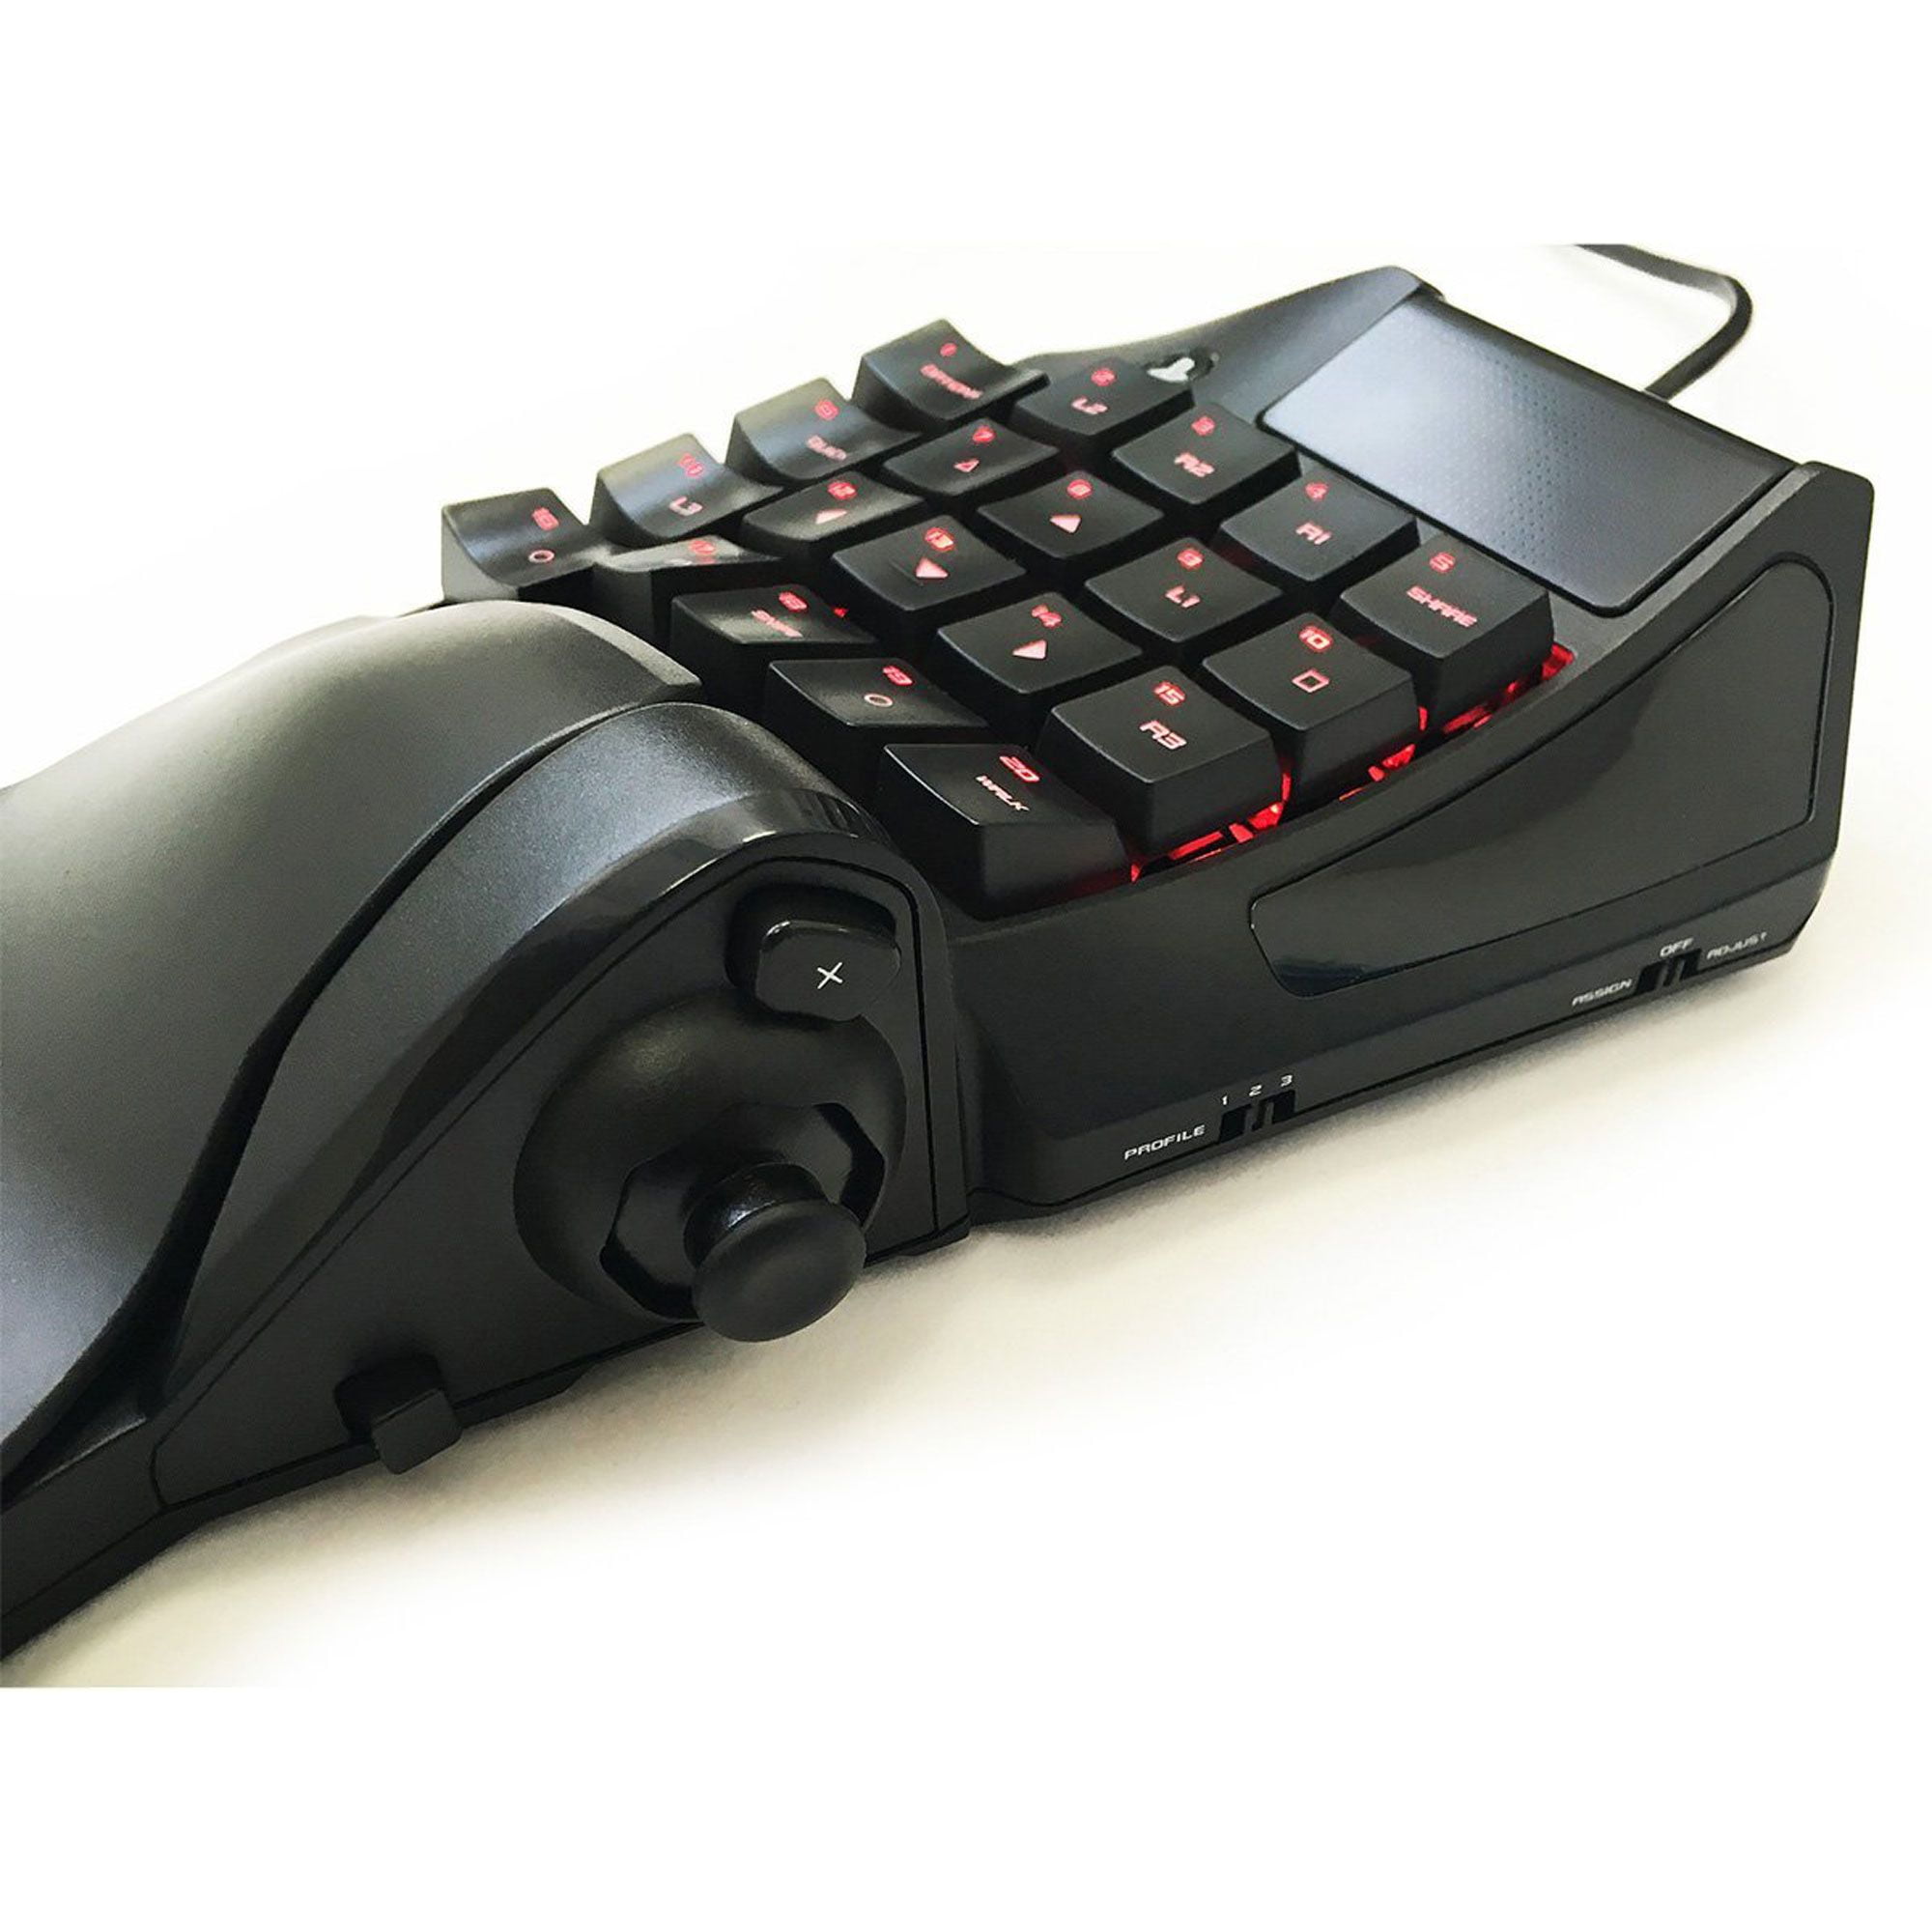 Tactical Assault Commander Pro KeyPad and Mouse For PS4/PS3 FPS Games - Walmart.com